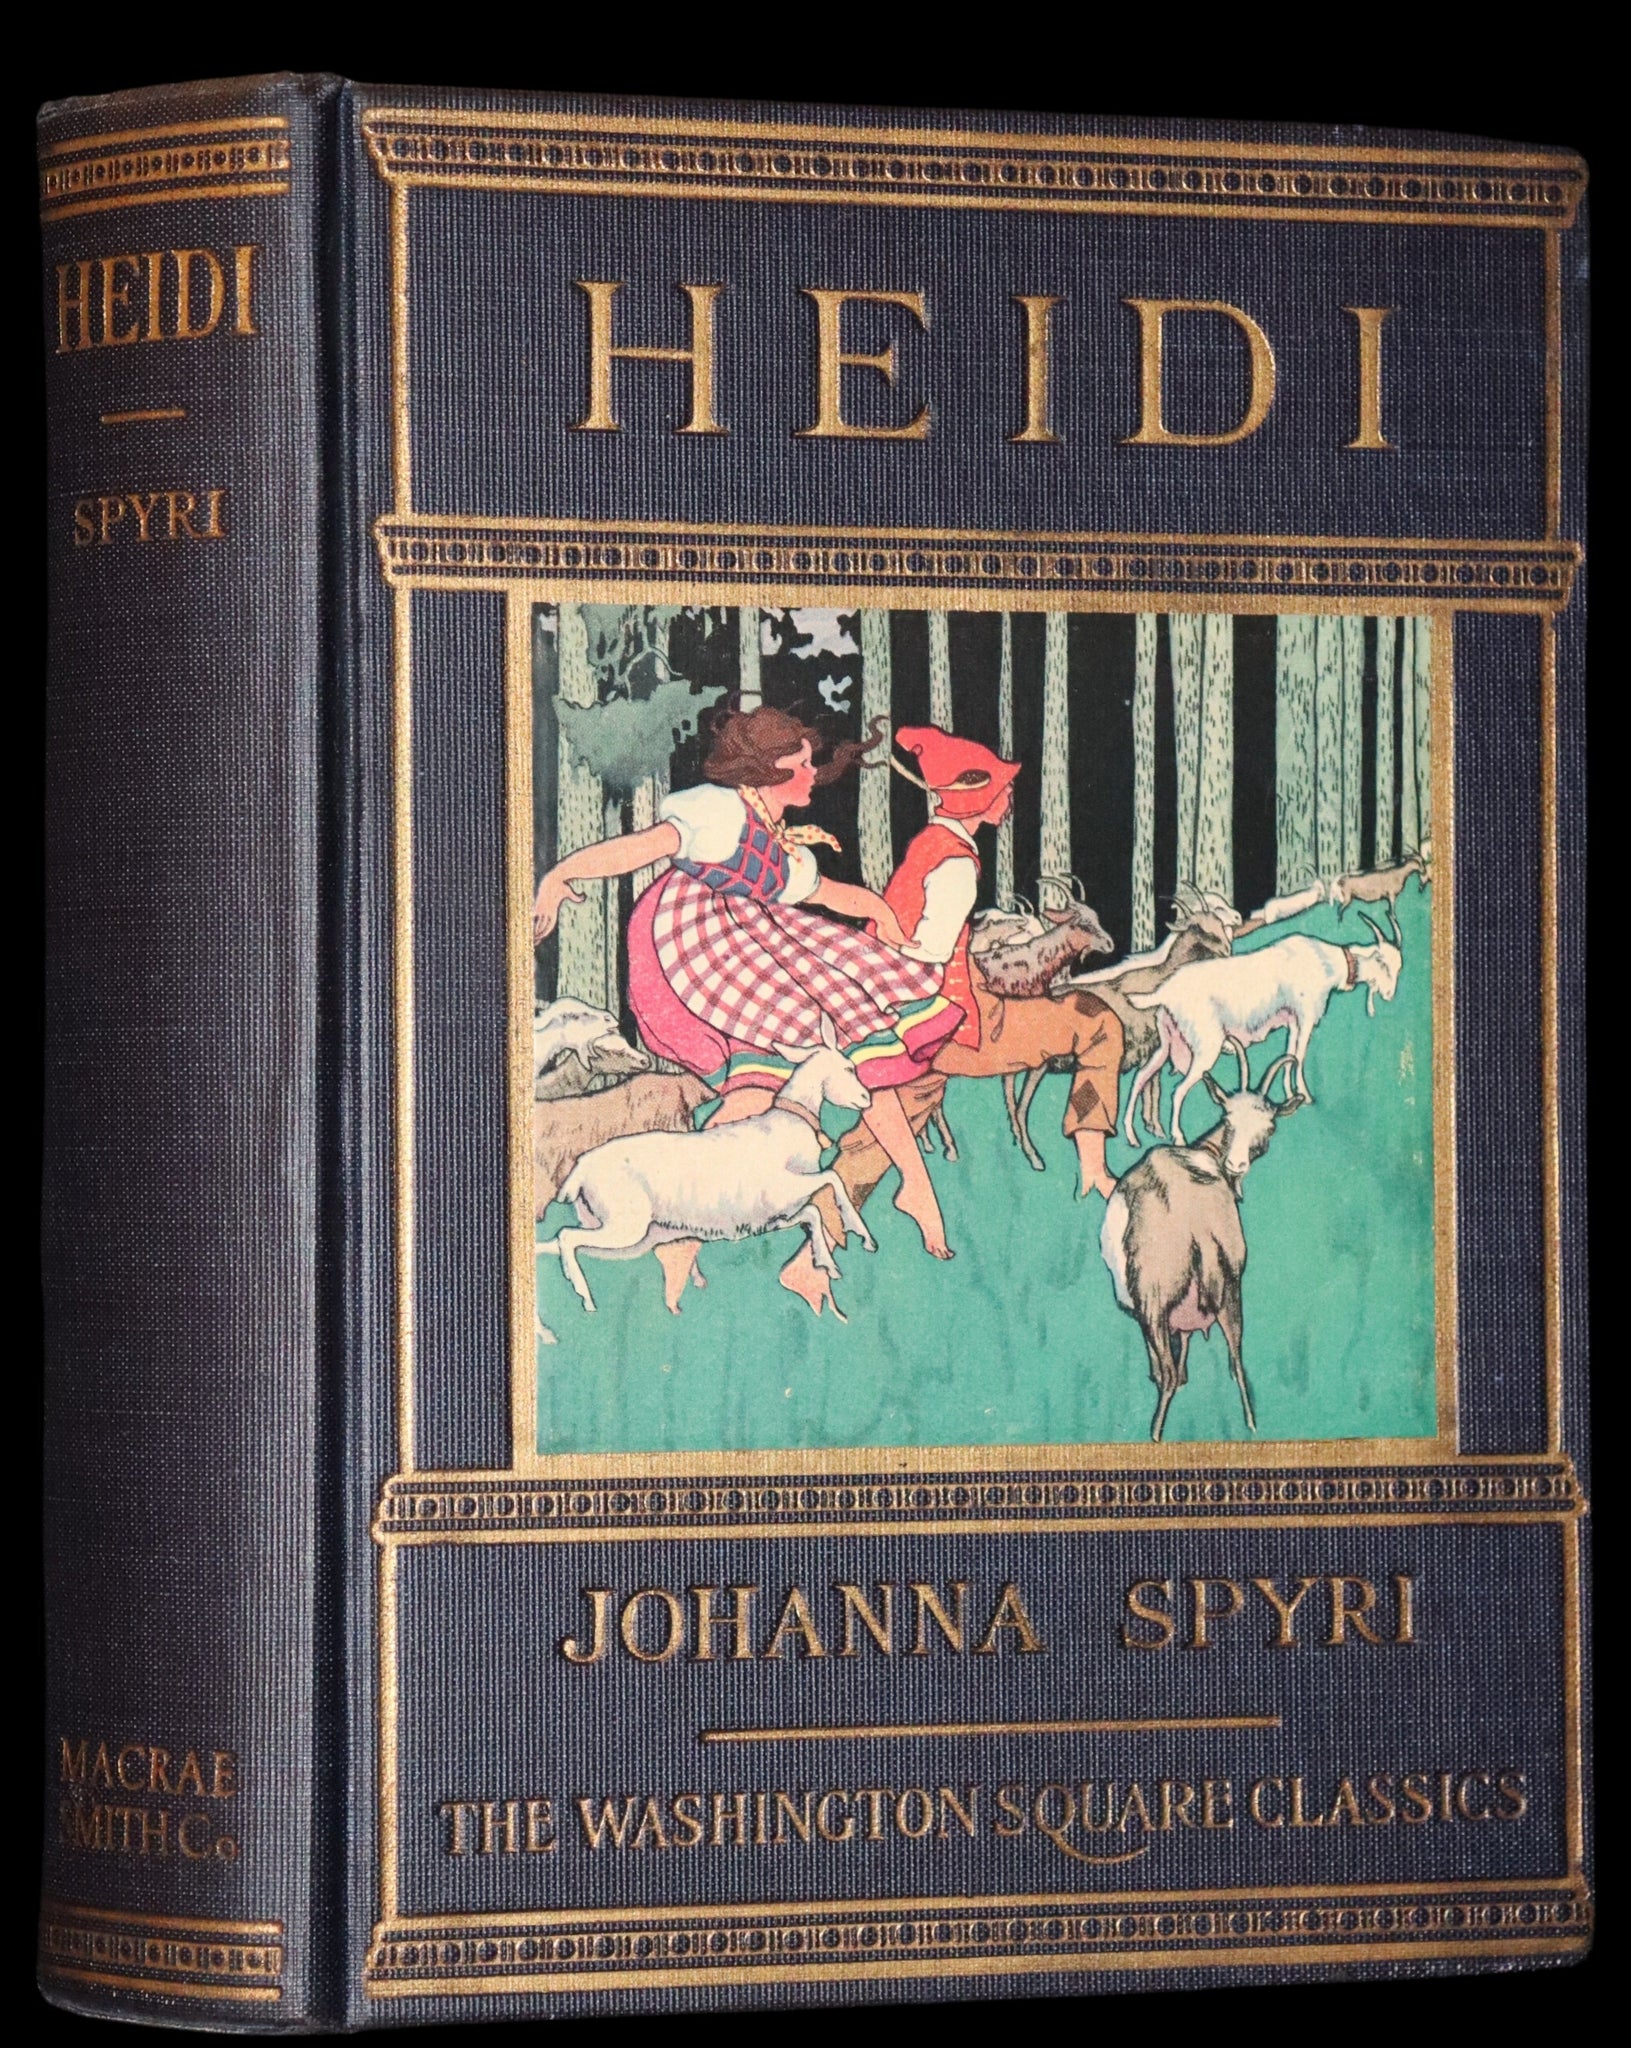 1925 Rare First Edition illustrated by Edna Cooke Shoemaker - HEIDI by Johanna Spyri.